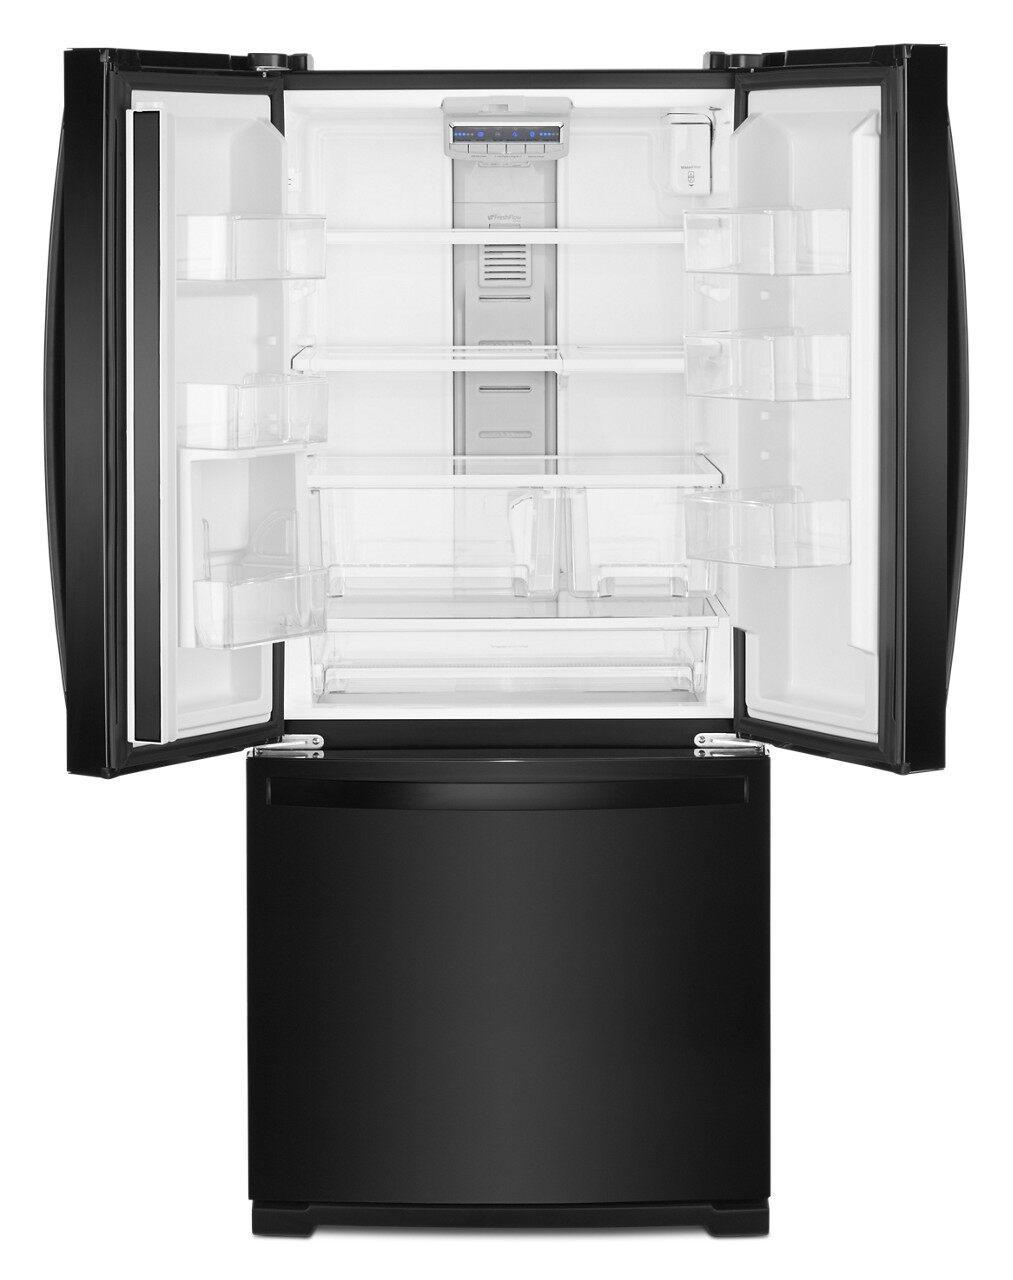 Whirlpool - 29.5 Inch 20 cu. ft French Door Refrigerator in Black - WRF560SFHB